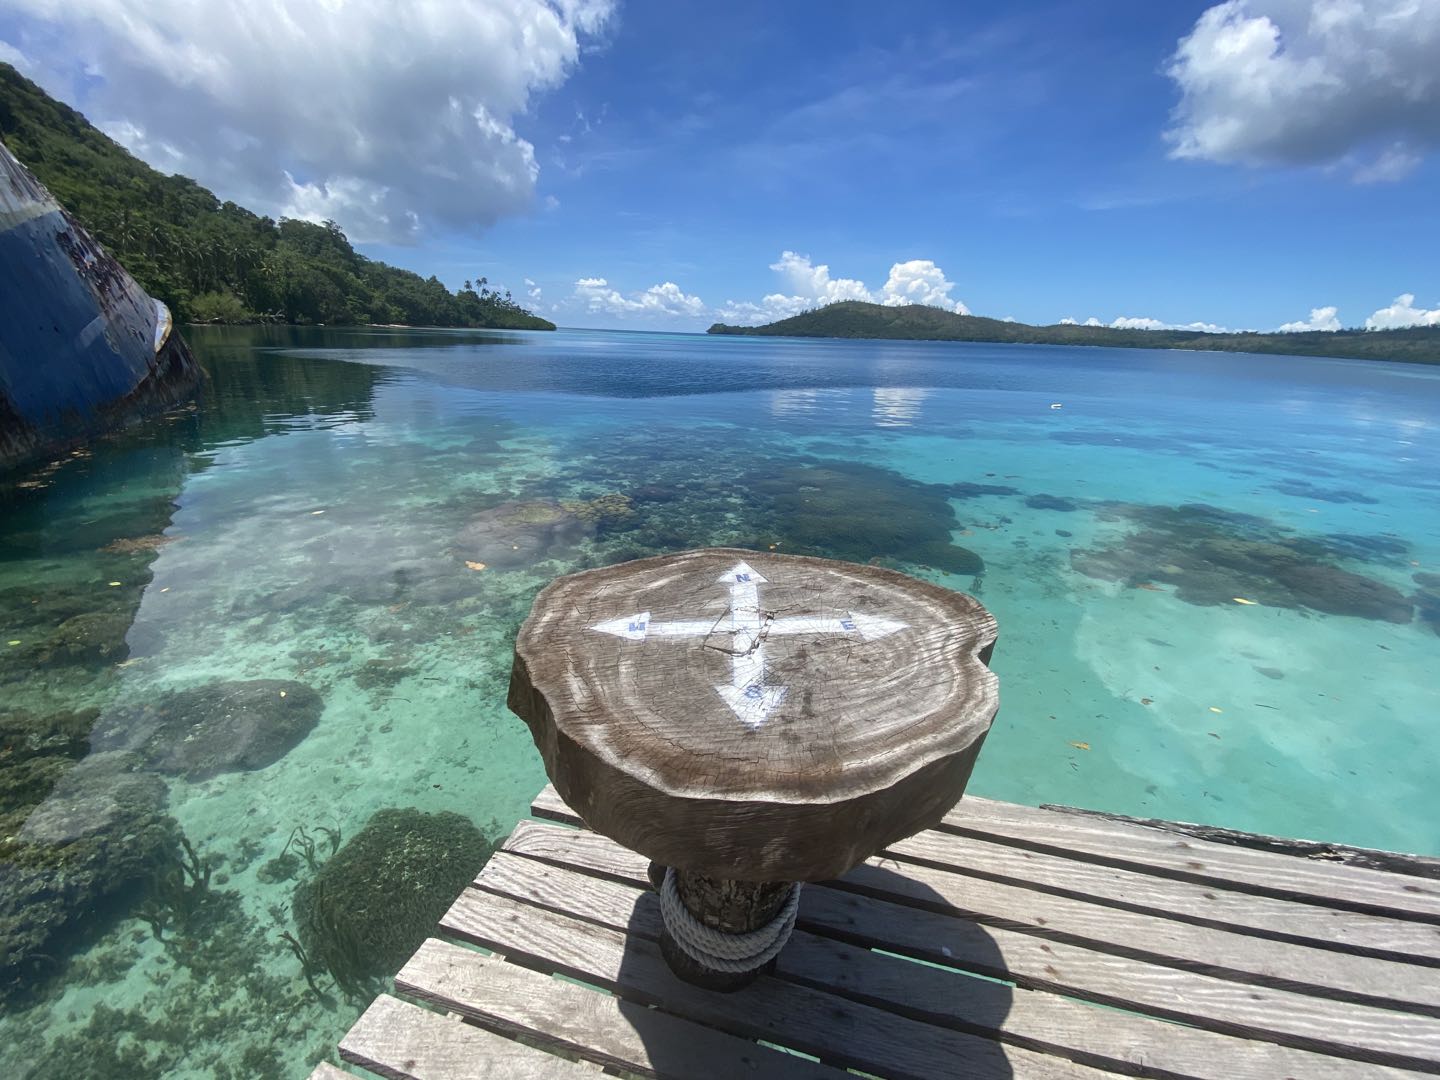 tourism in solomon islands pdf